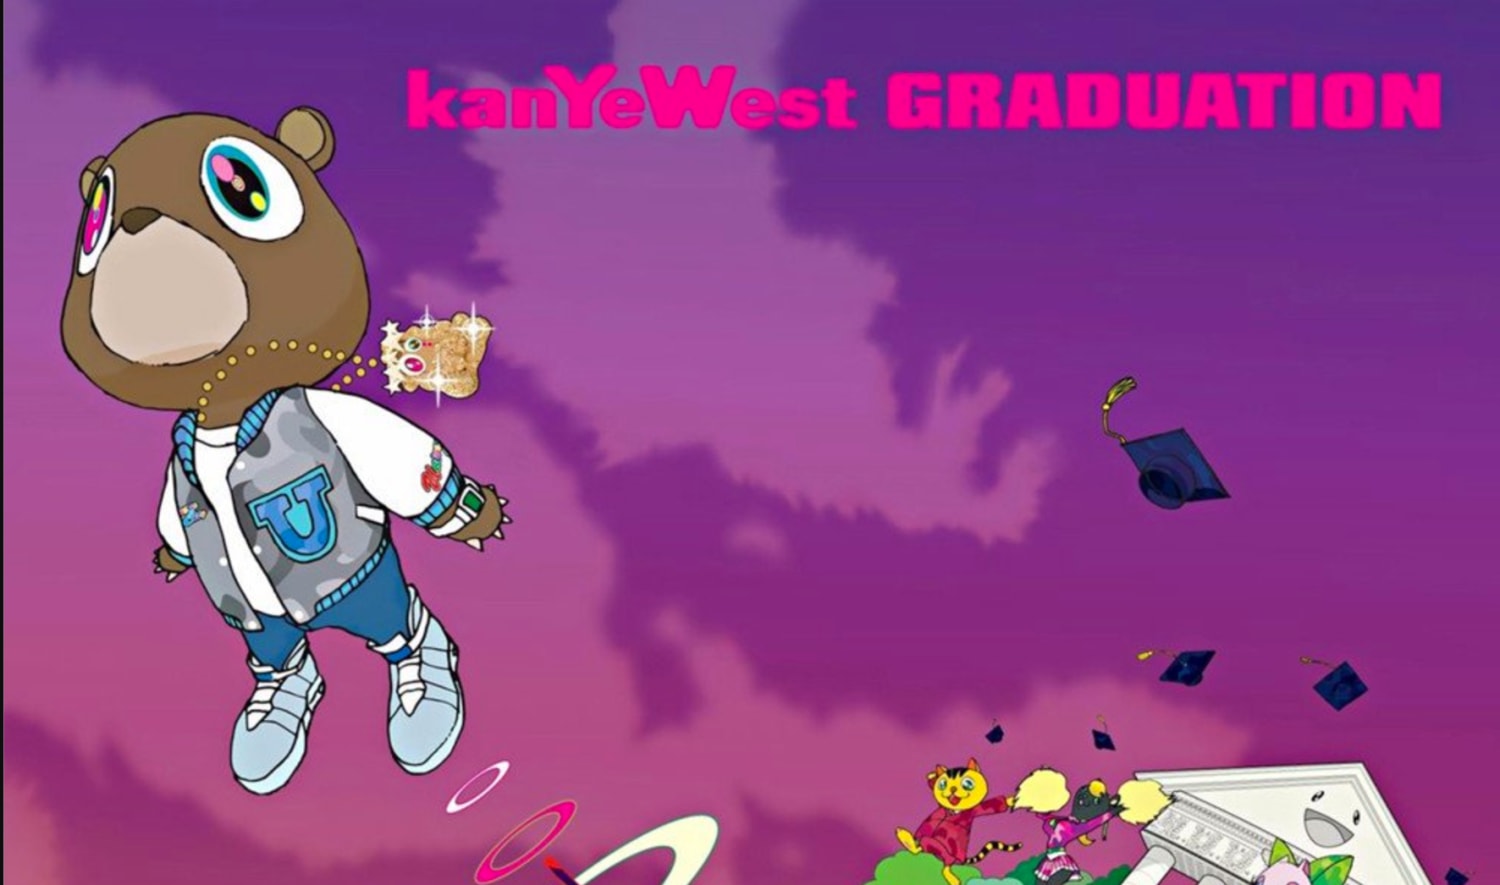 Kanye west graduation album credits